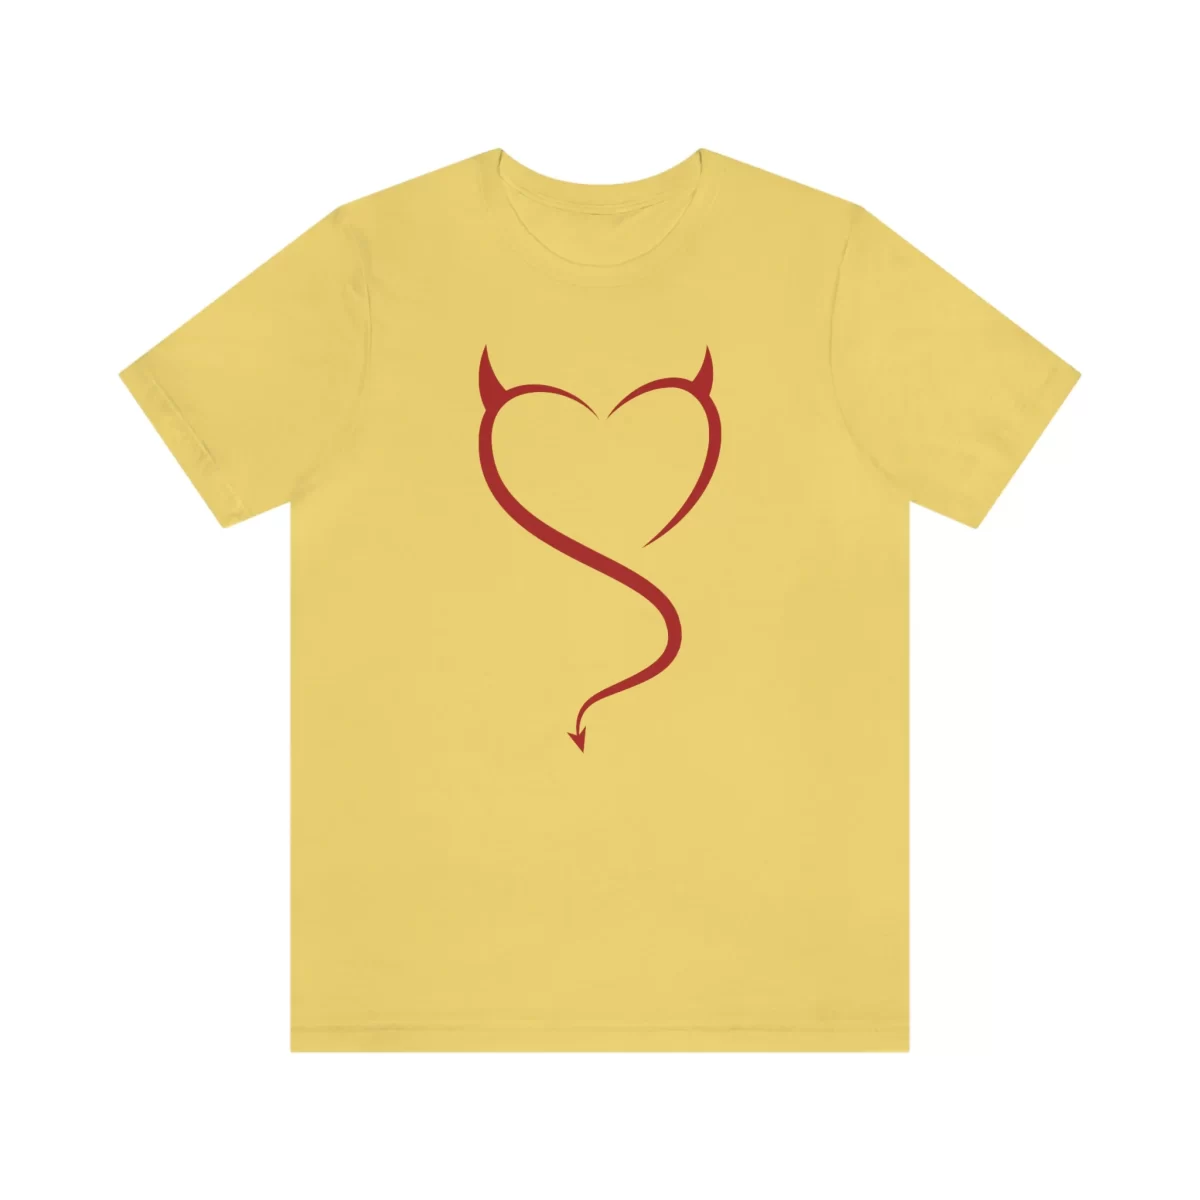 Unisex T Shirt Devil Heart Yellow Front